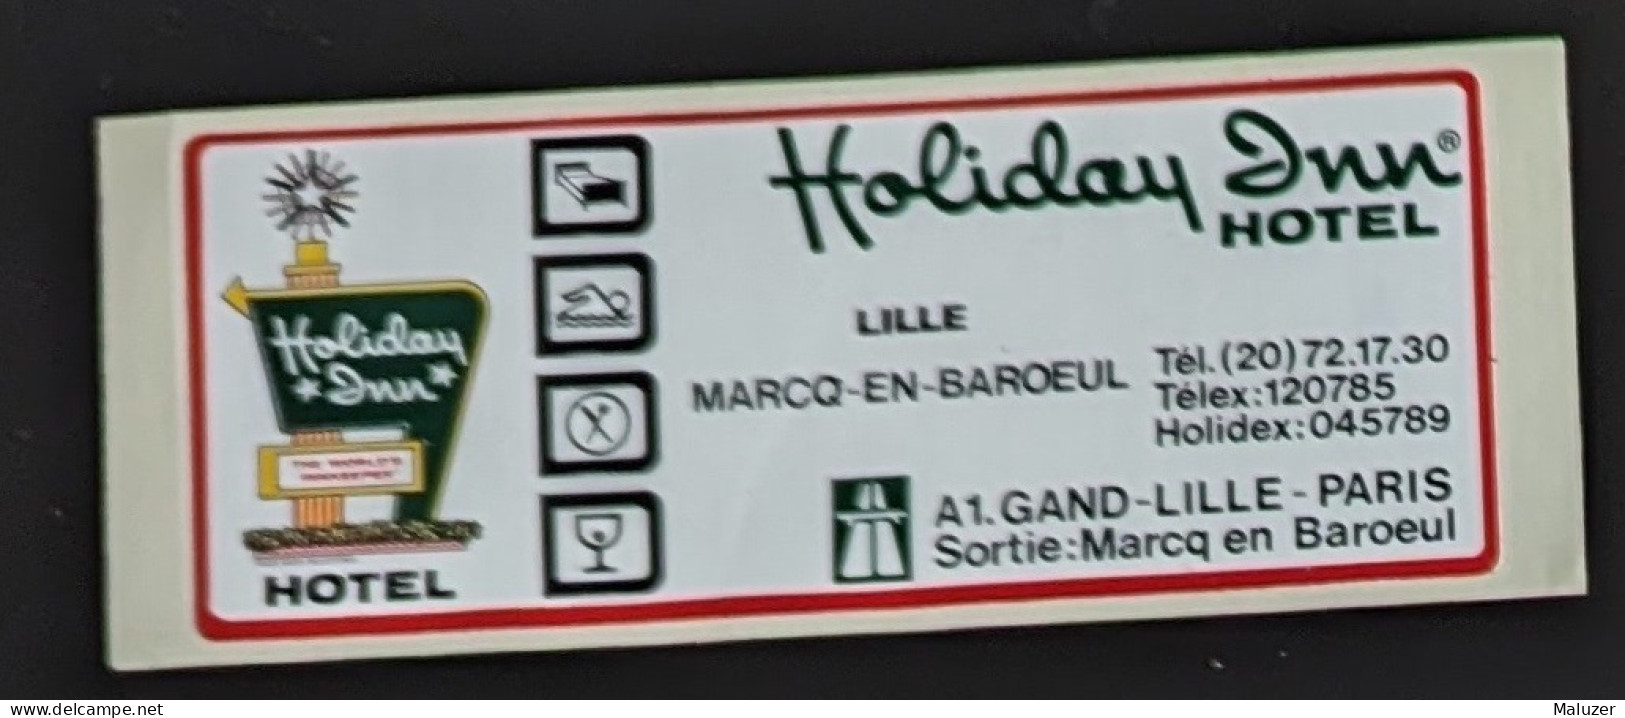 AUTOCOLLANT HOLIDAY INN - HÔTEL -LILLE MARCQ EN BAROEUL -59 NORD - Autocollants